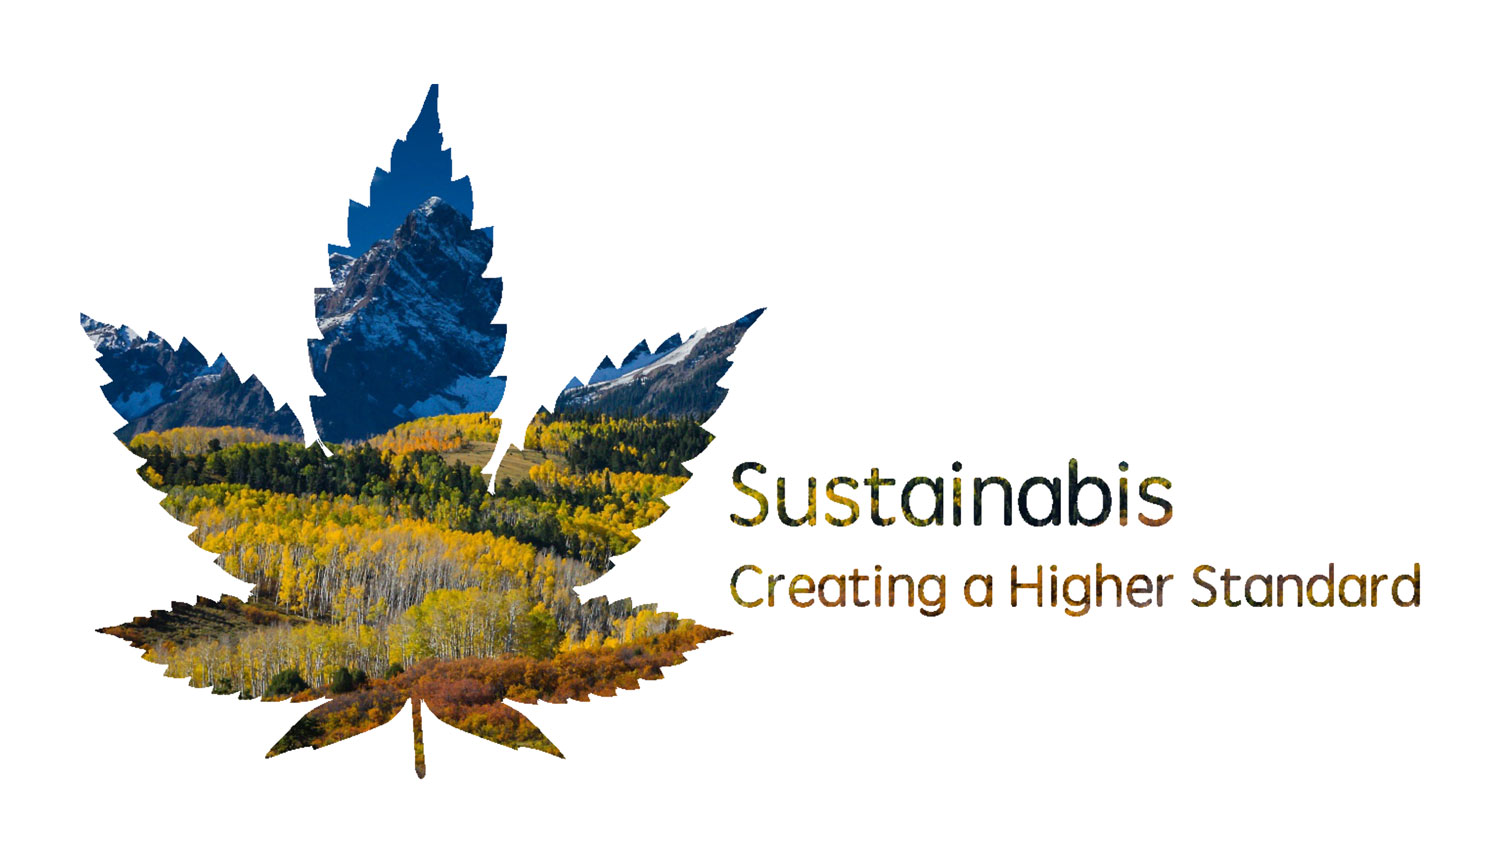 sustainabis sustainable cannabis